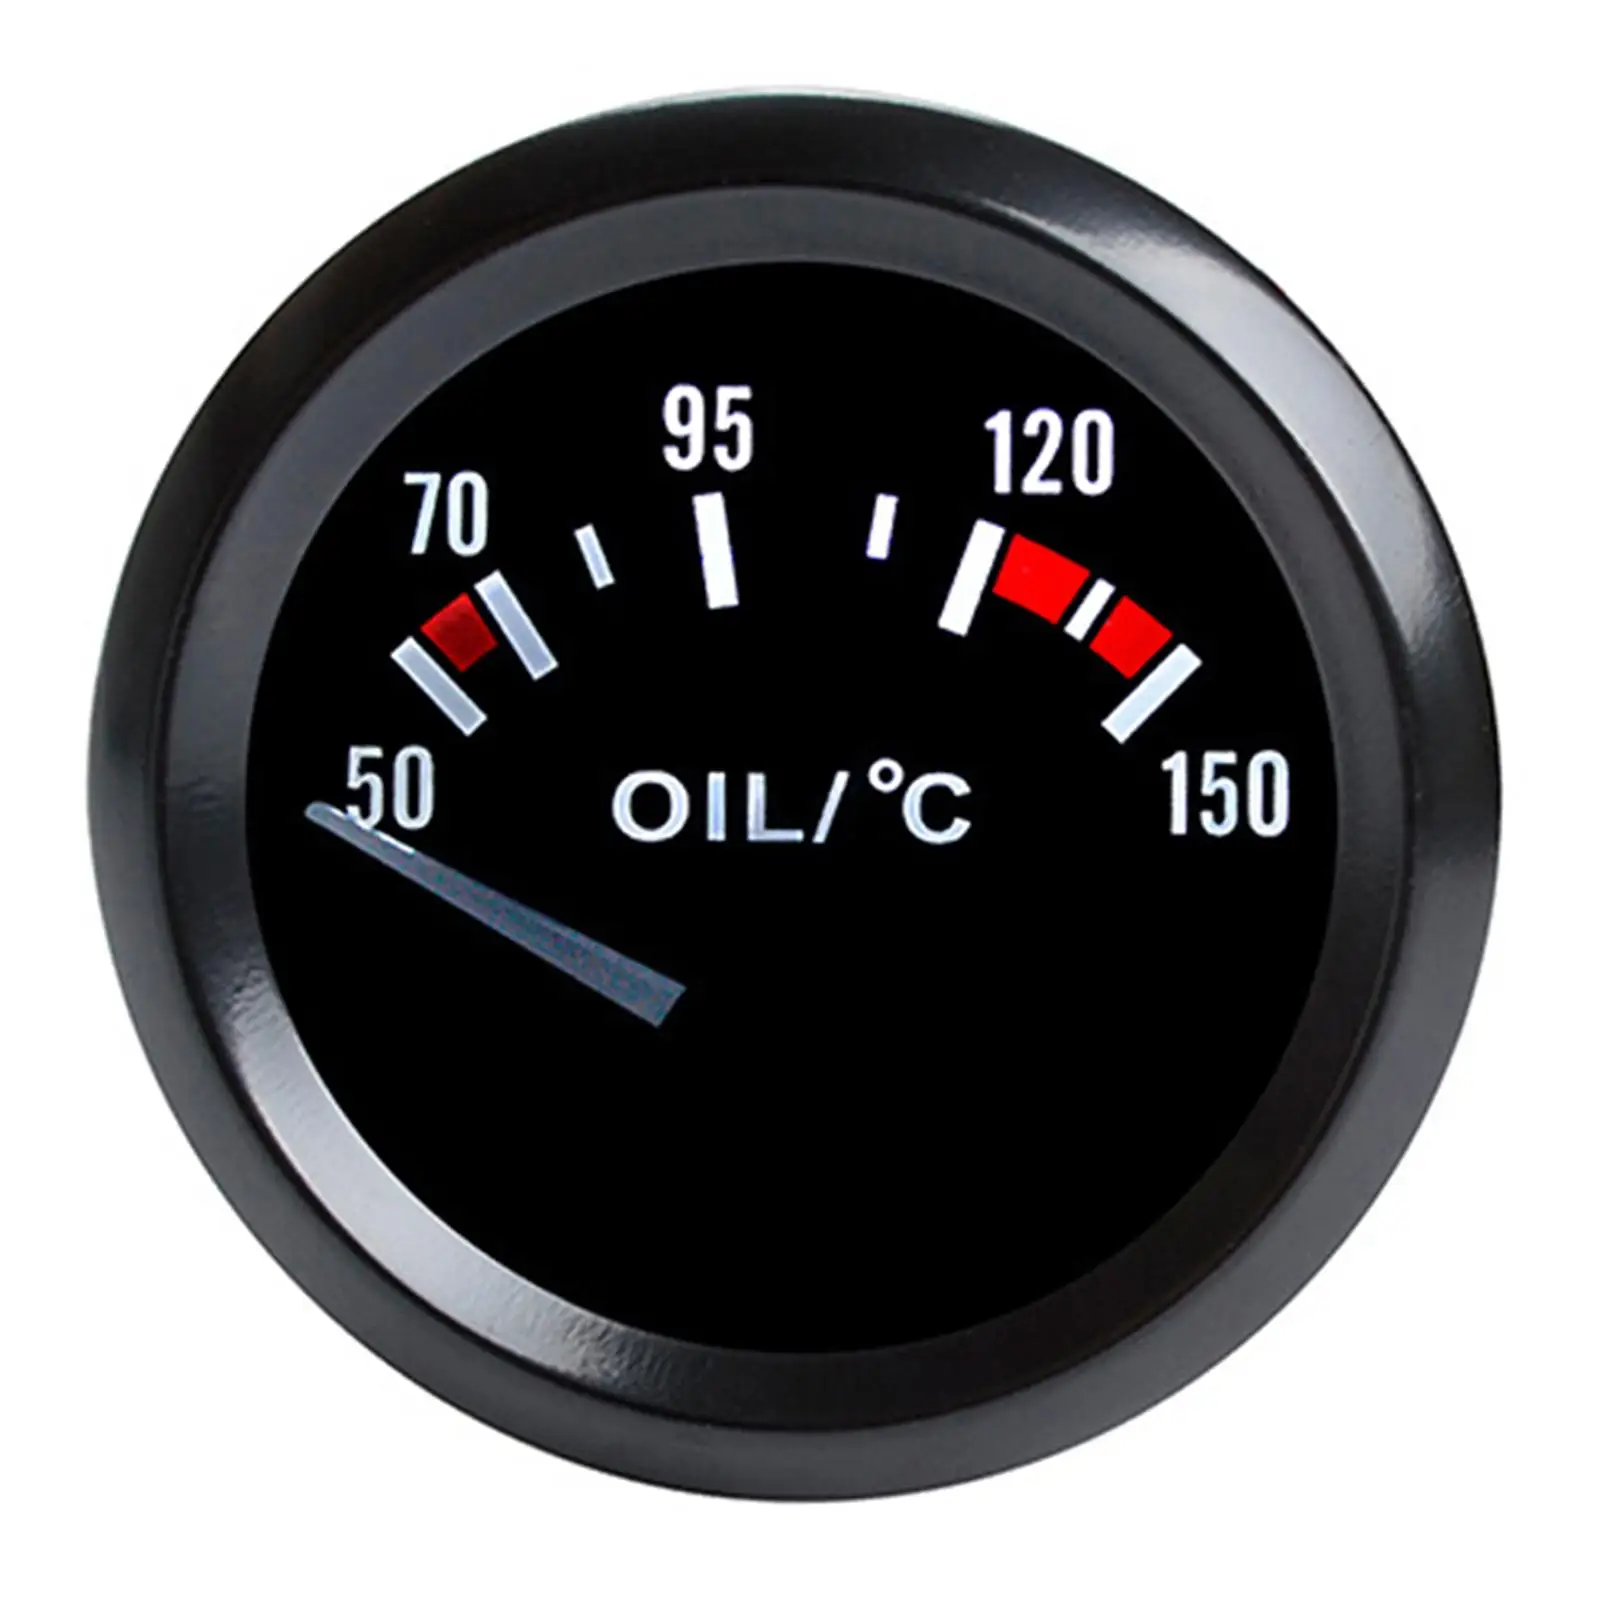 Oil Temp Gauge LED Display Premium Car Oil Temp Gauge Meter for Vehicle